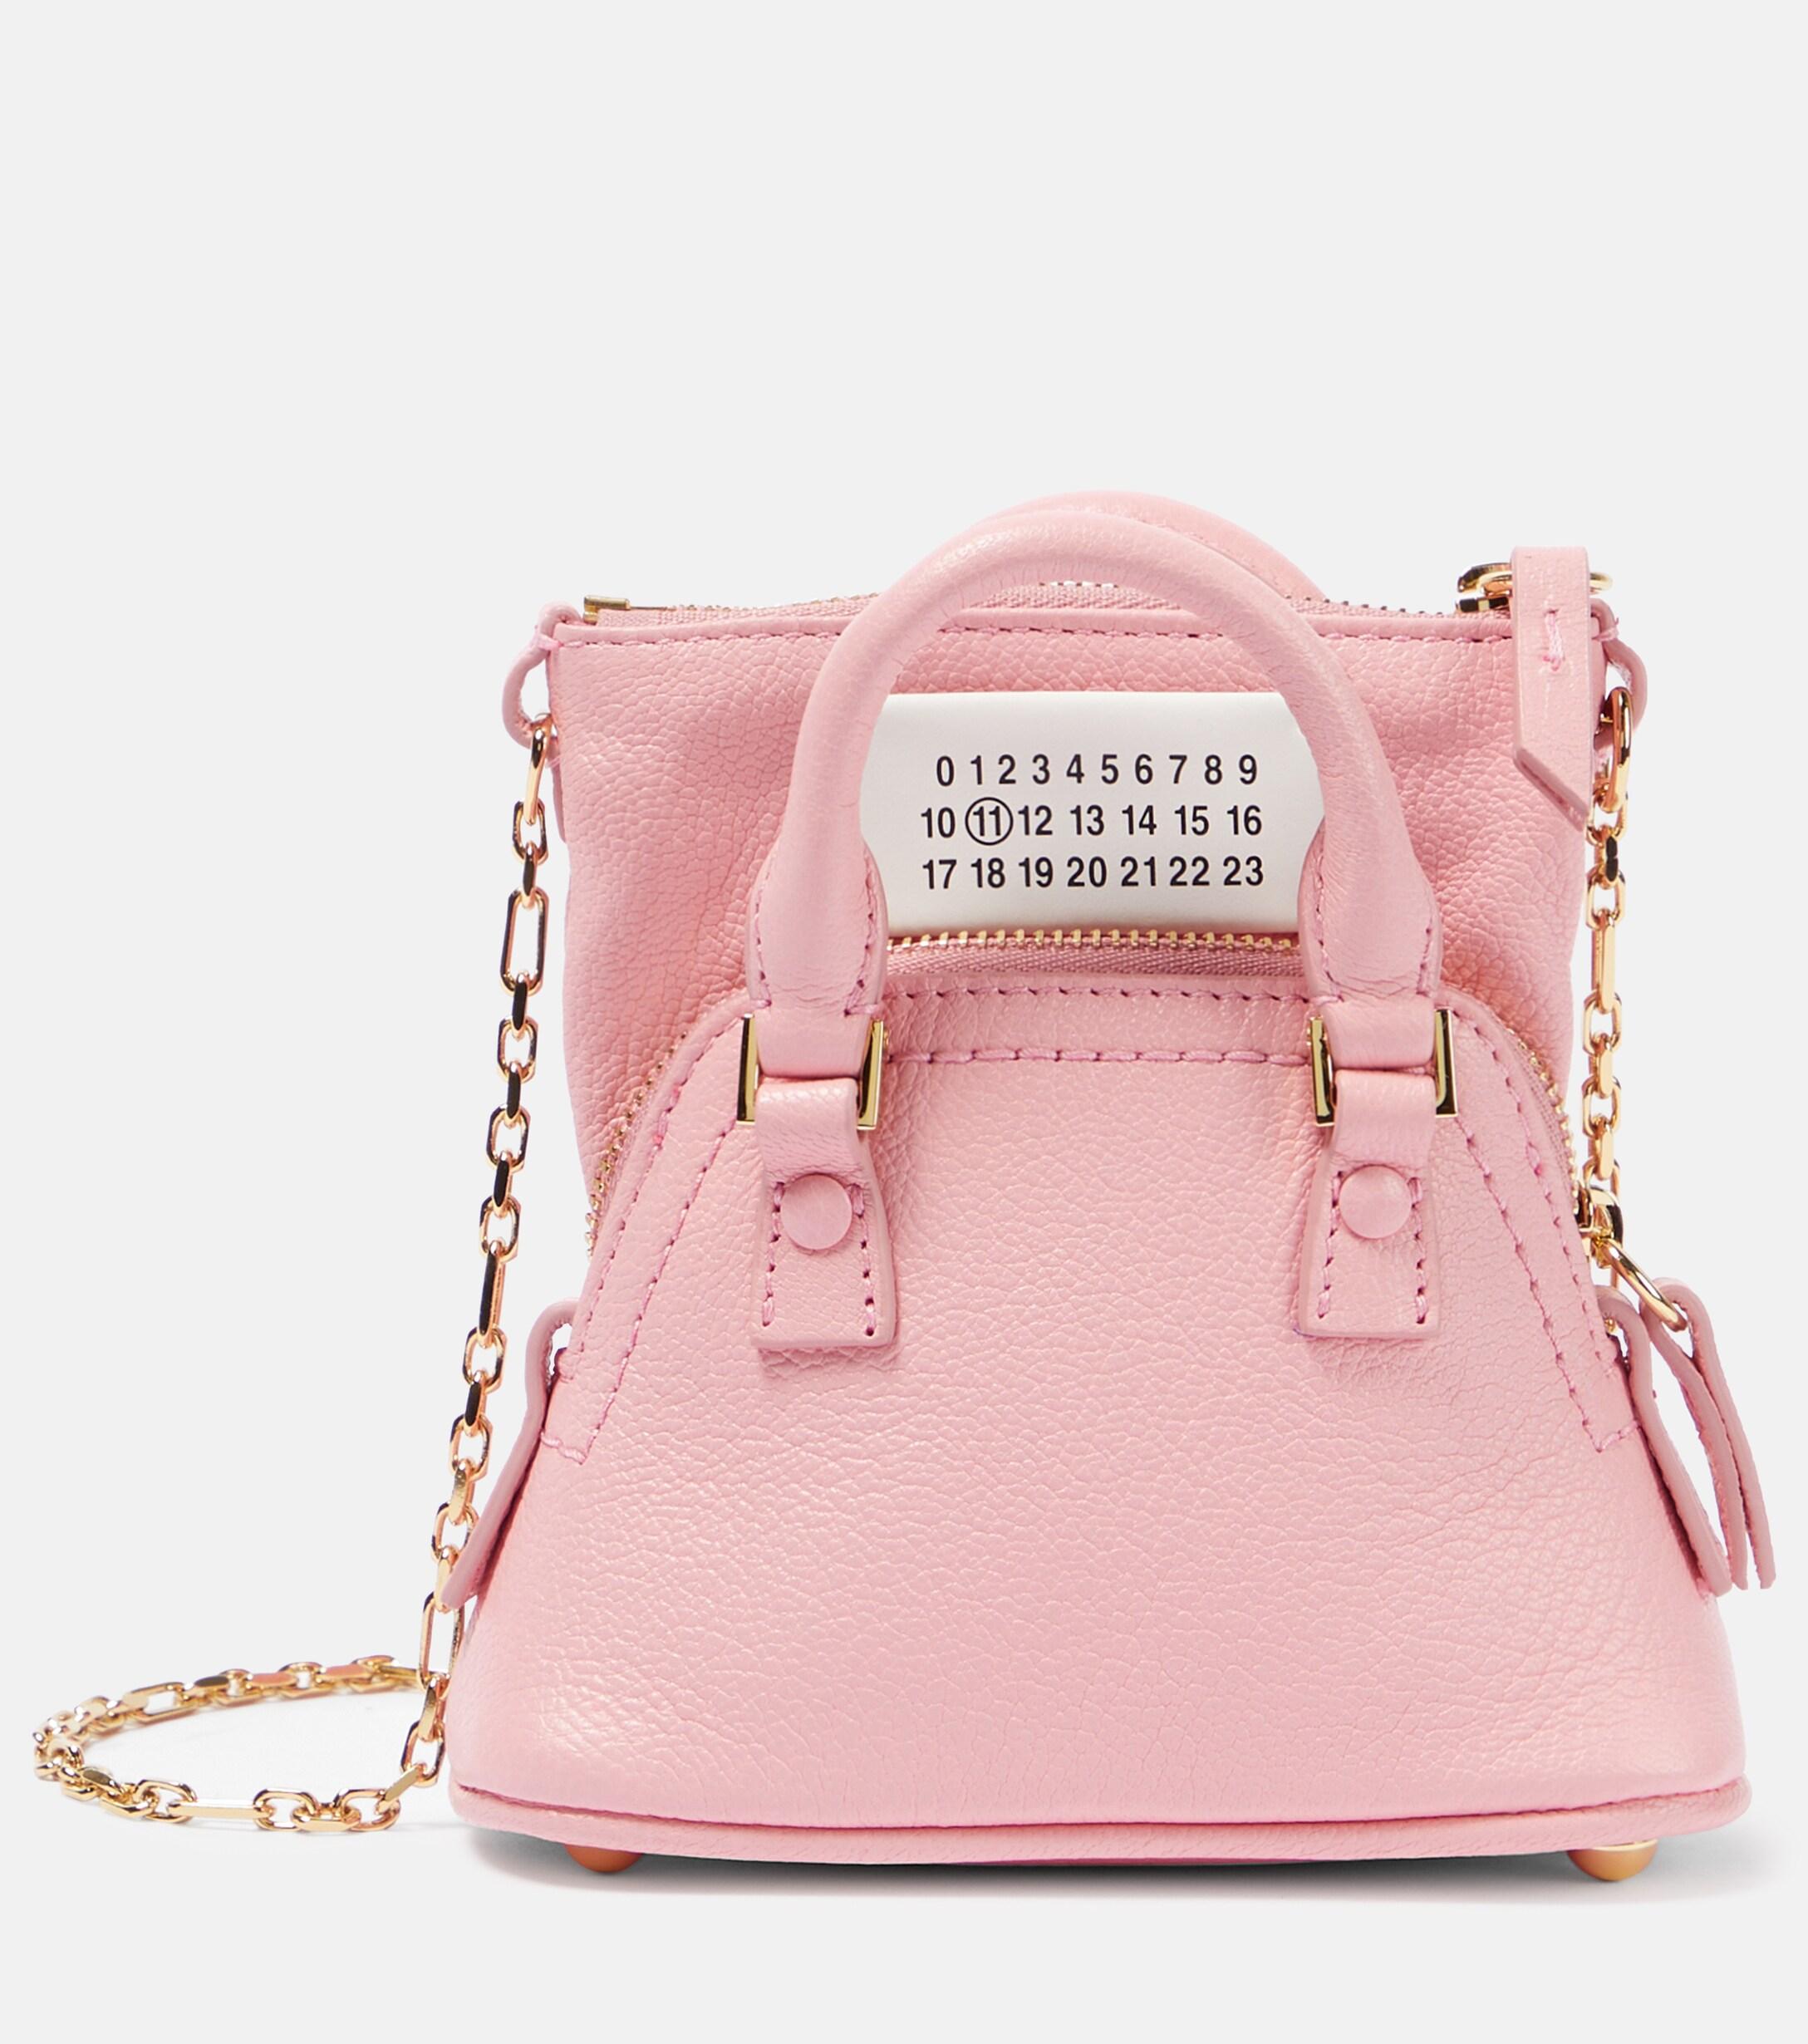 Maison Margiela 5ac Classique Baby Leather Shoulder Bag in Pink | Lyst ...